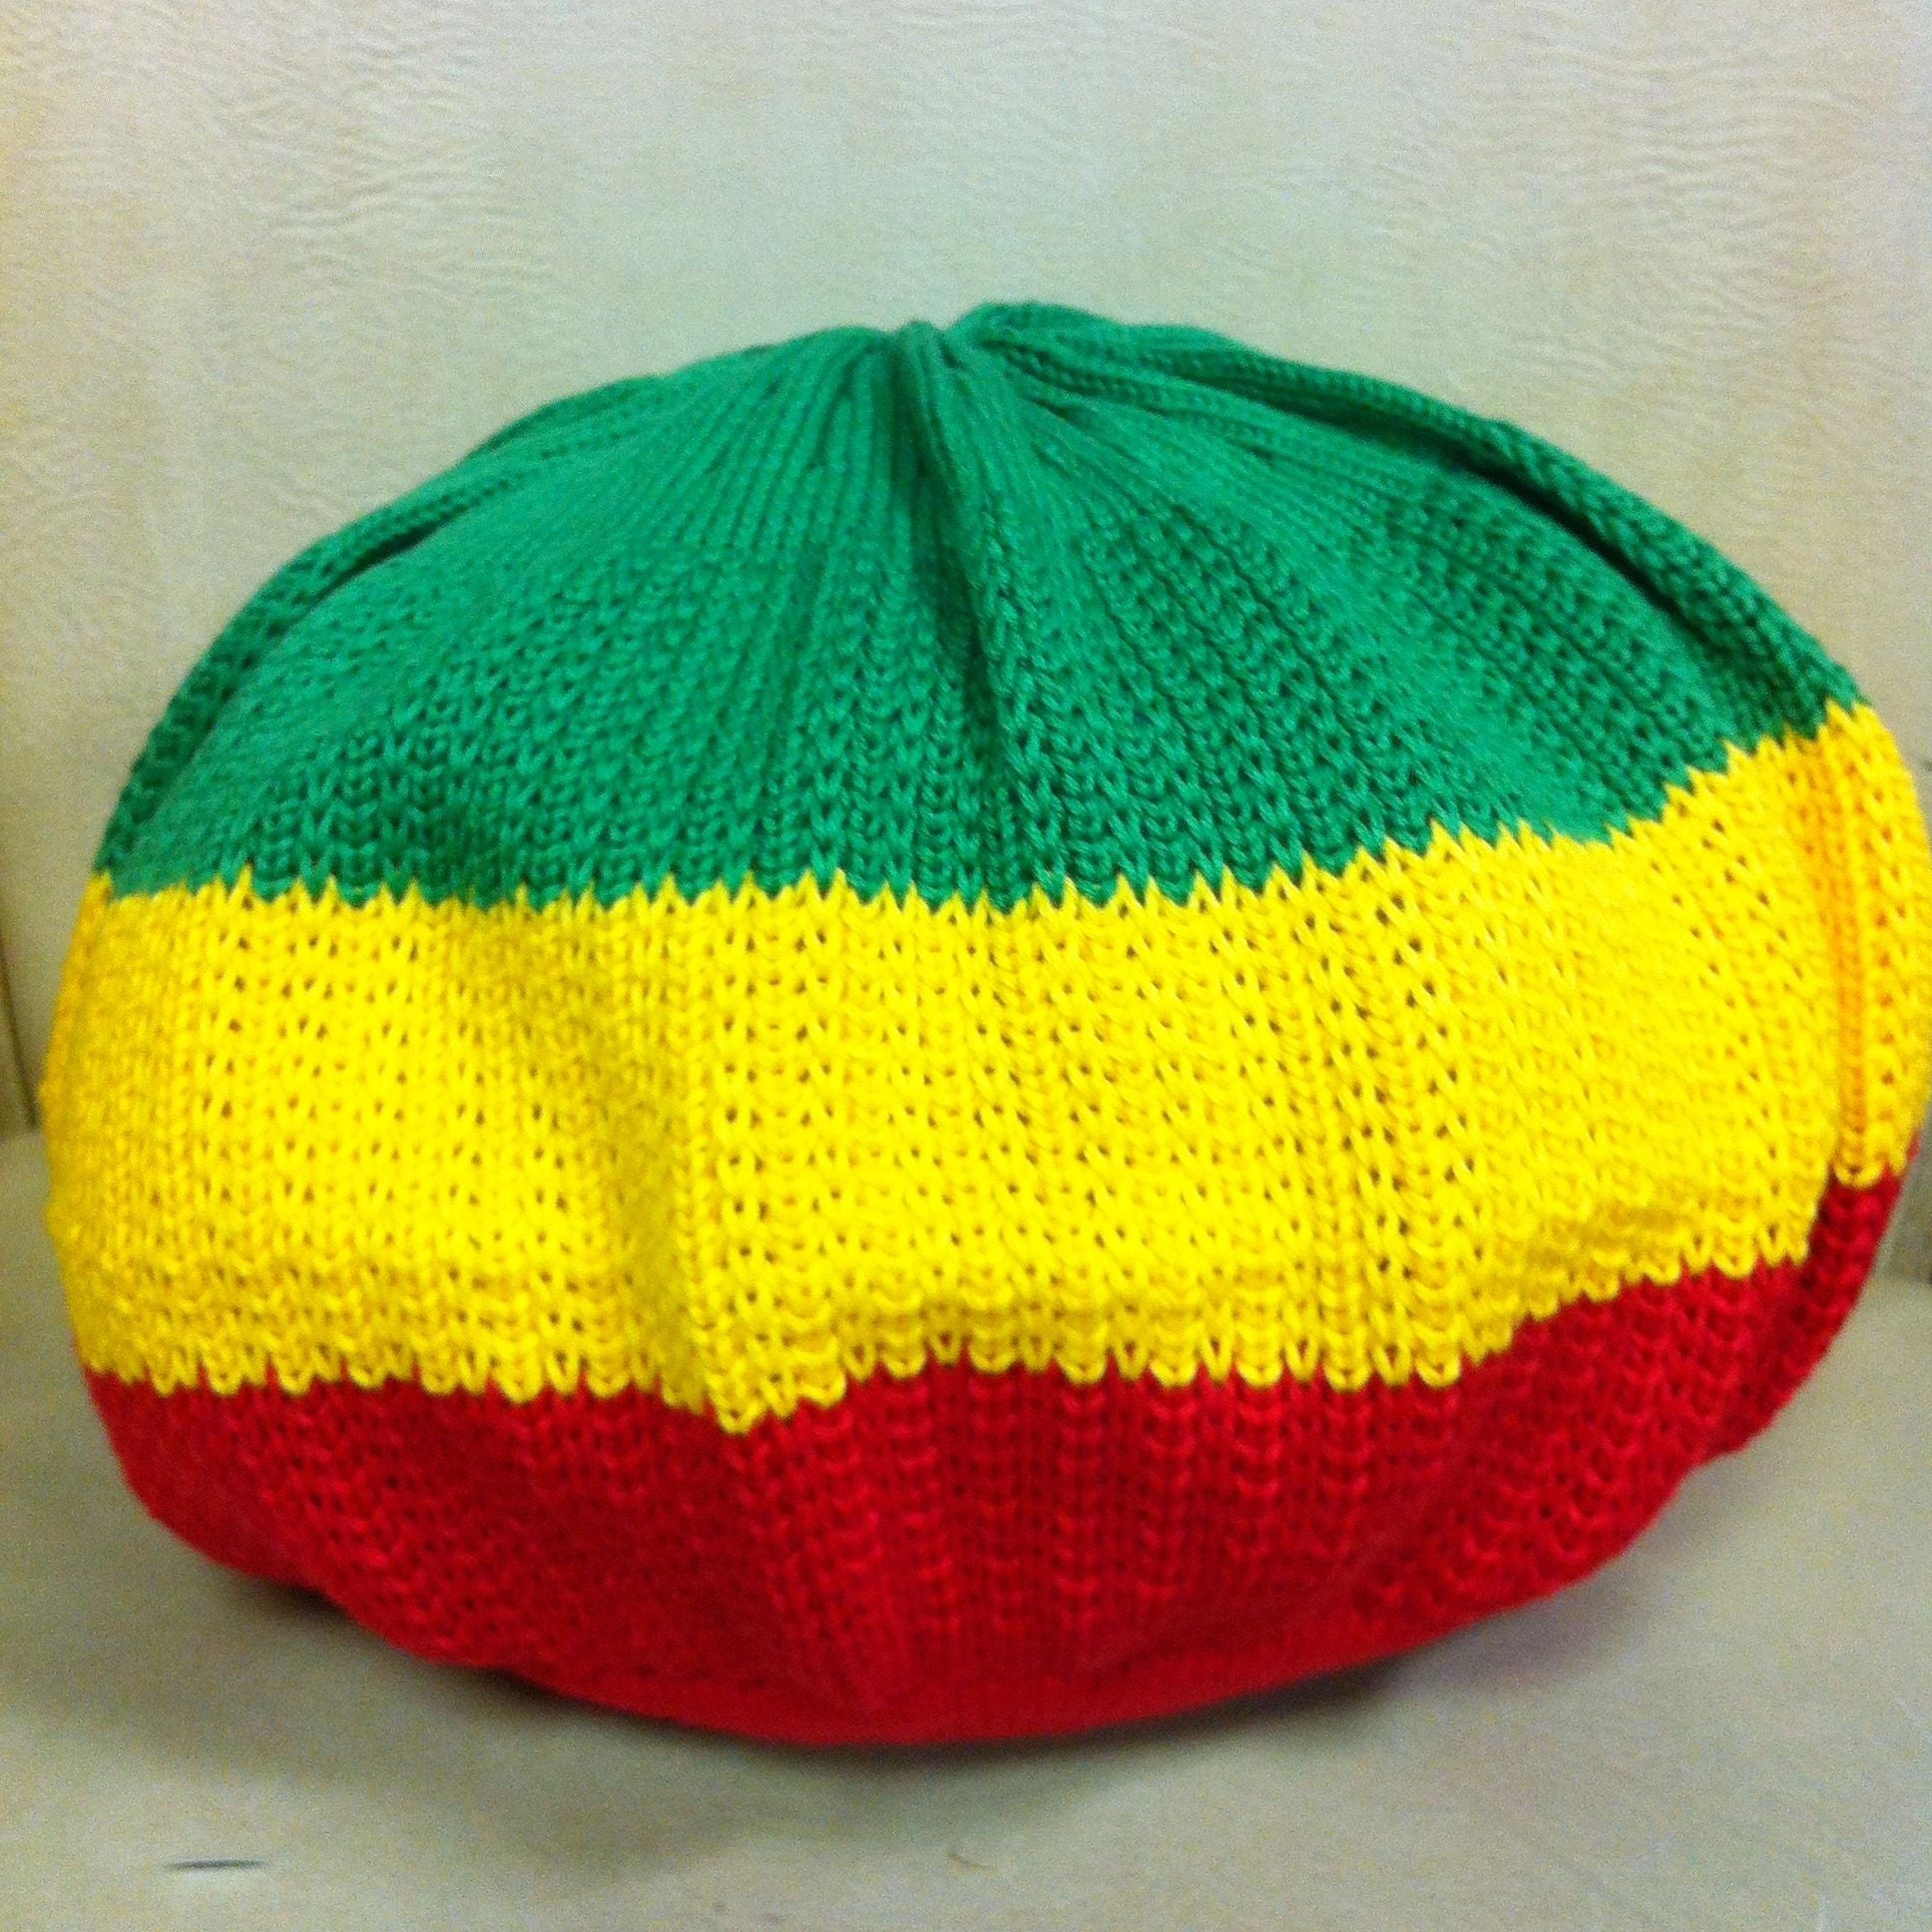 RH005-RYG Medium Rastafarian Crown - rasta hats tams dread locks cap